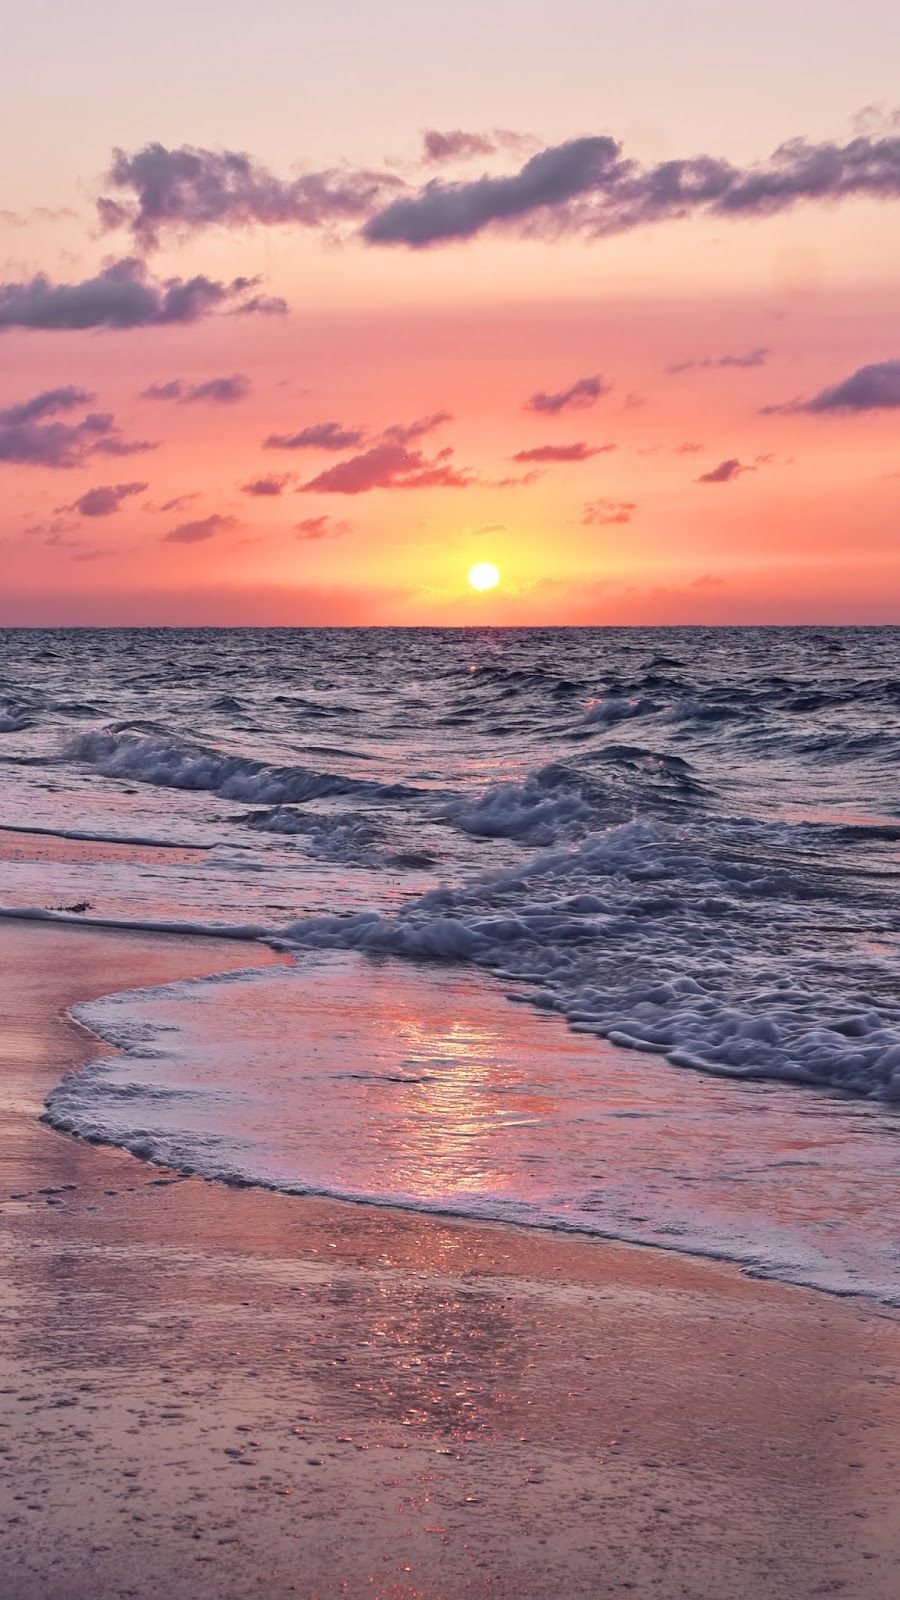 Sunset on the beach #wallpaper #iphone .com